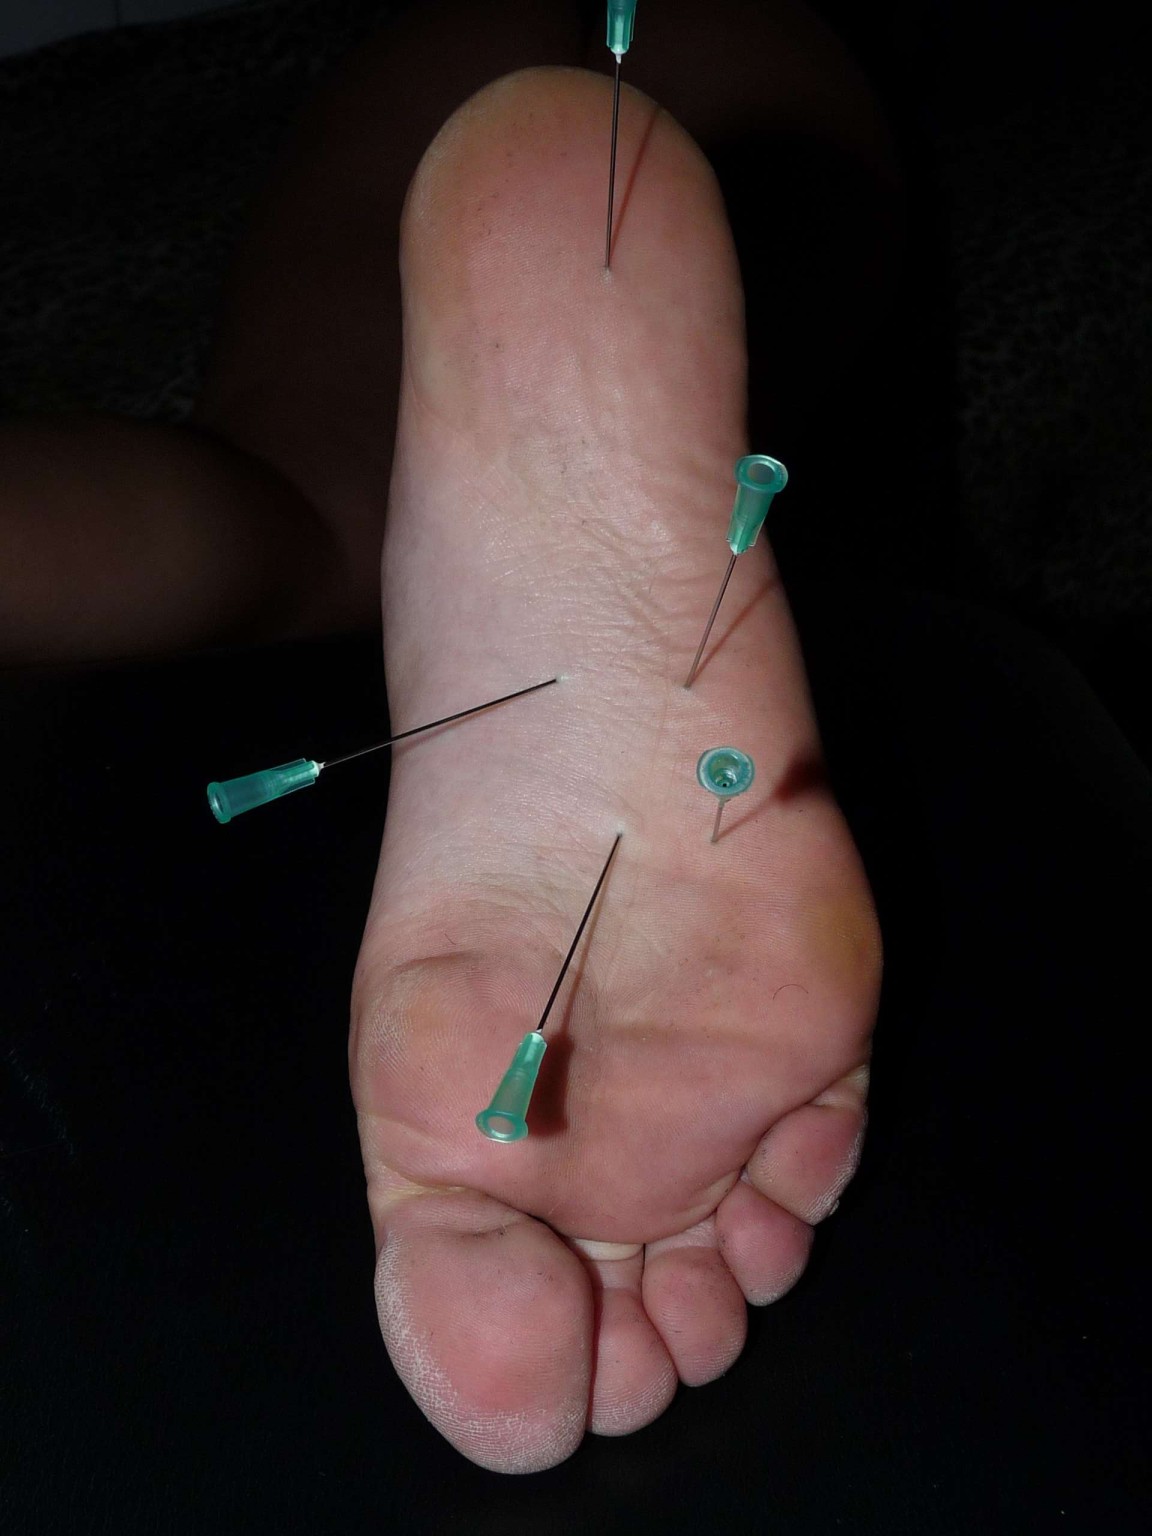 Extreme amateur needle pain and nipple piercing tortures of european painslut pu #72055098